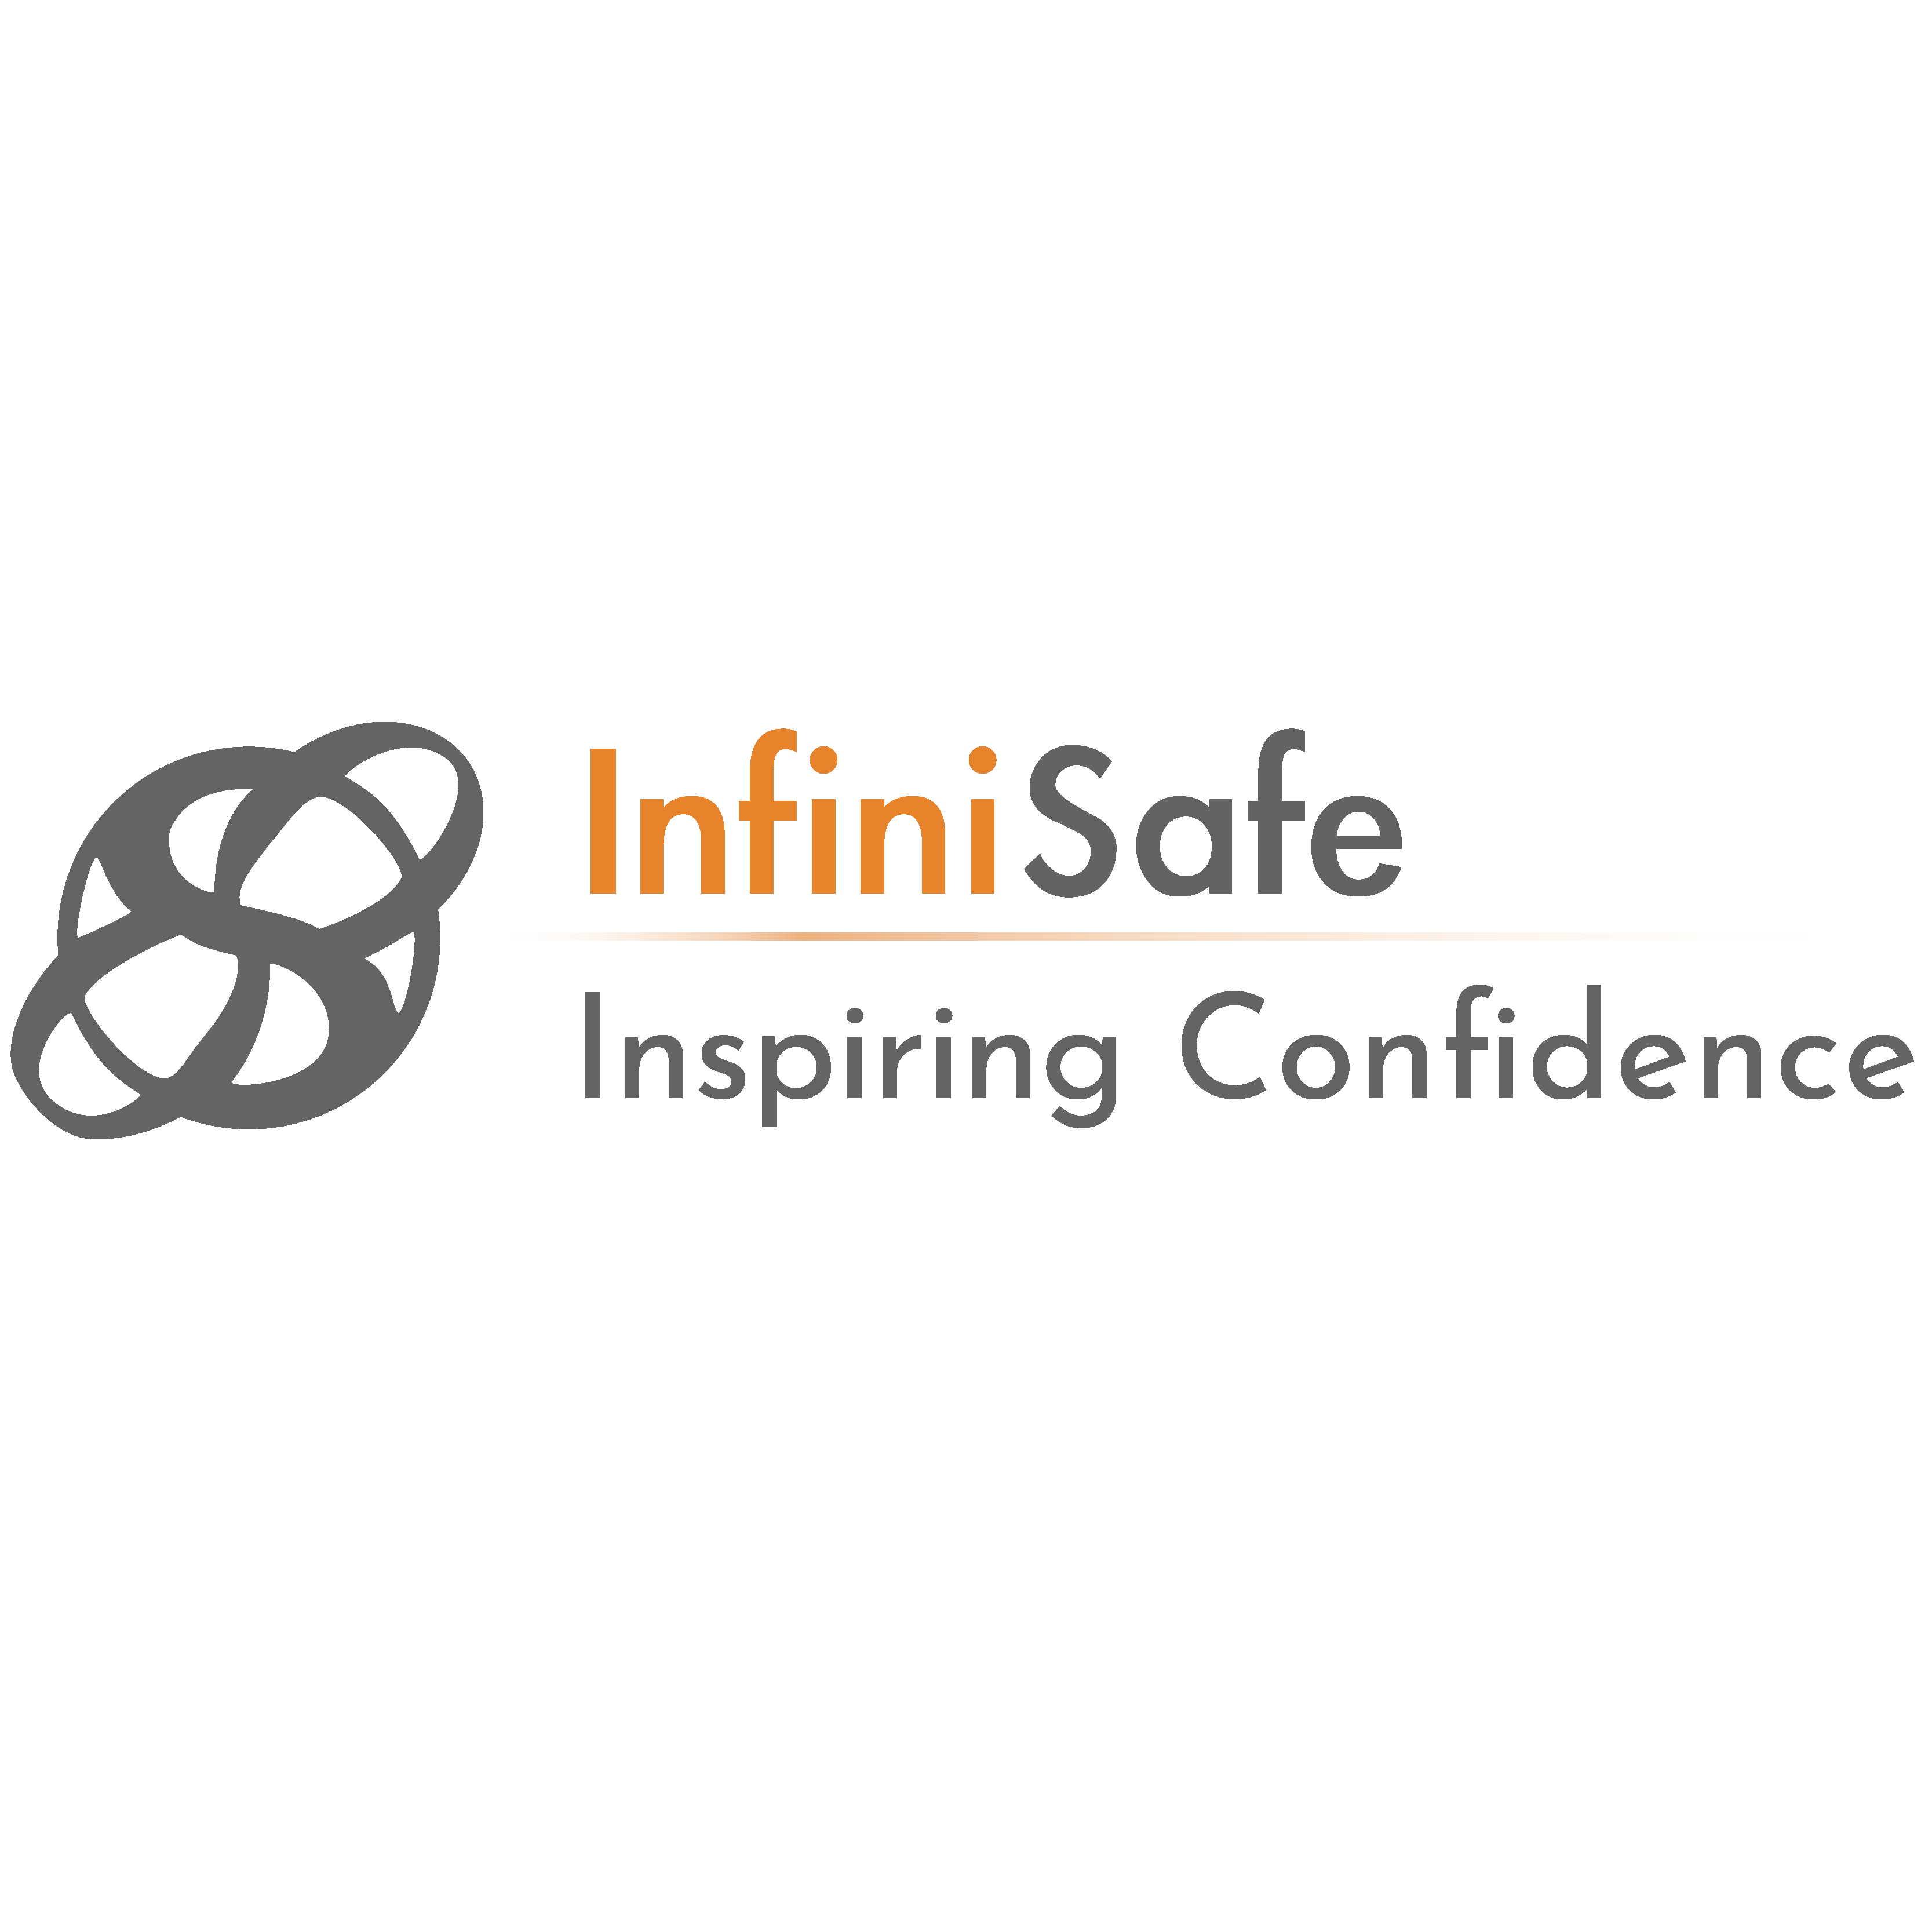 InfiniSafe